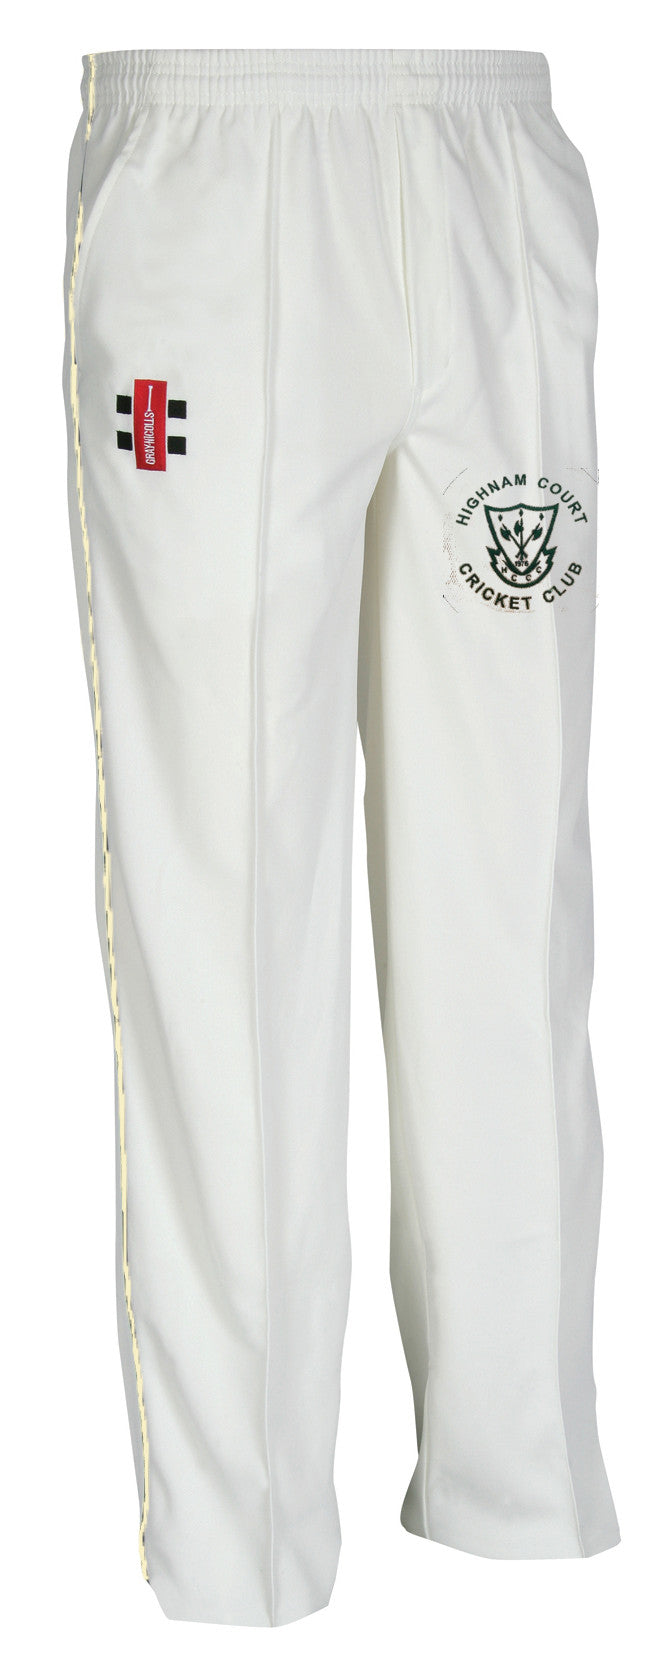 Highnam Court CC Matrix Cricket Trouser